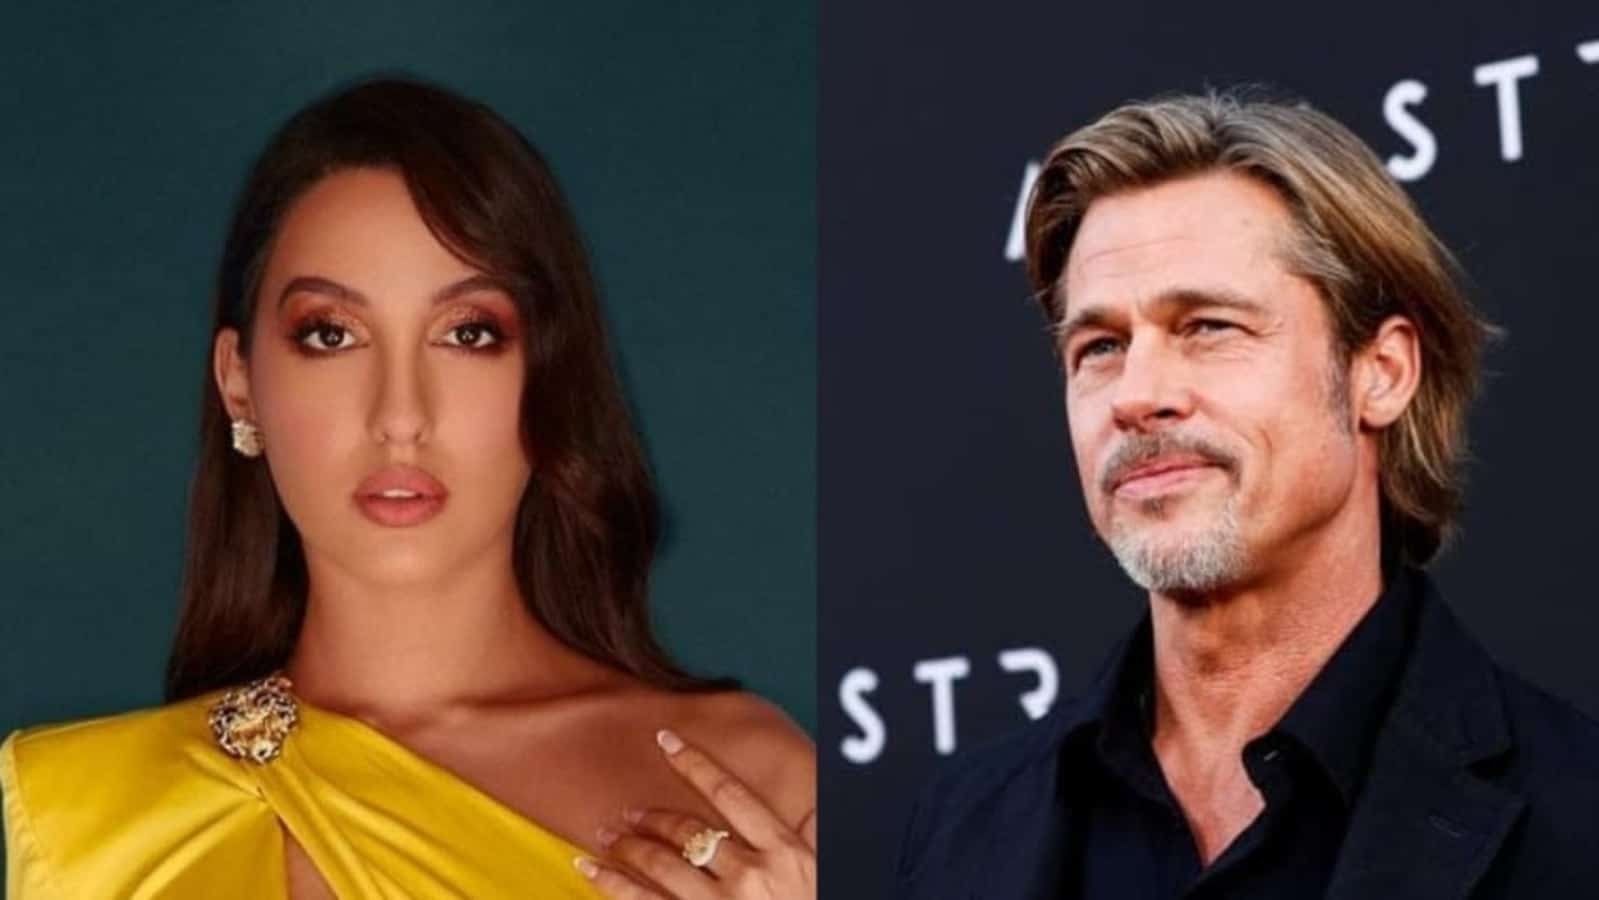 Brad Pitt seeking love from Nora Fatehi amidst feud with Angelina Jolie?